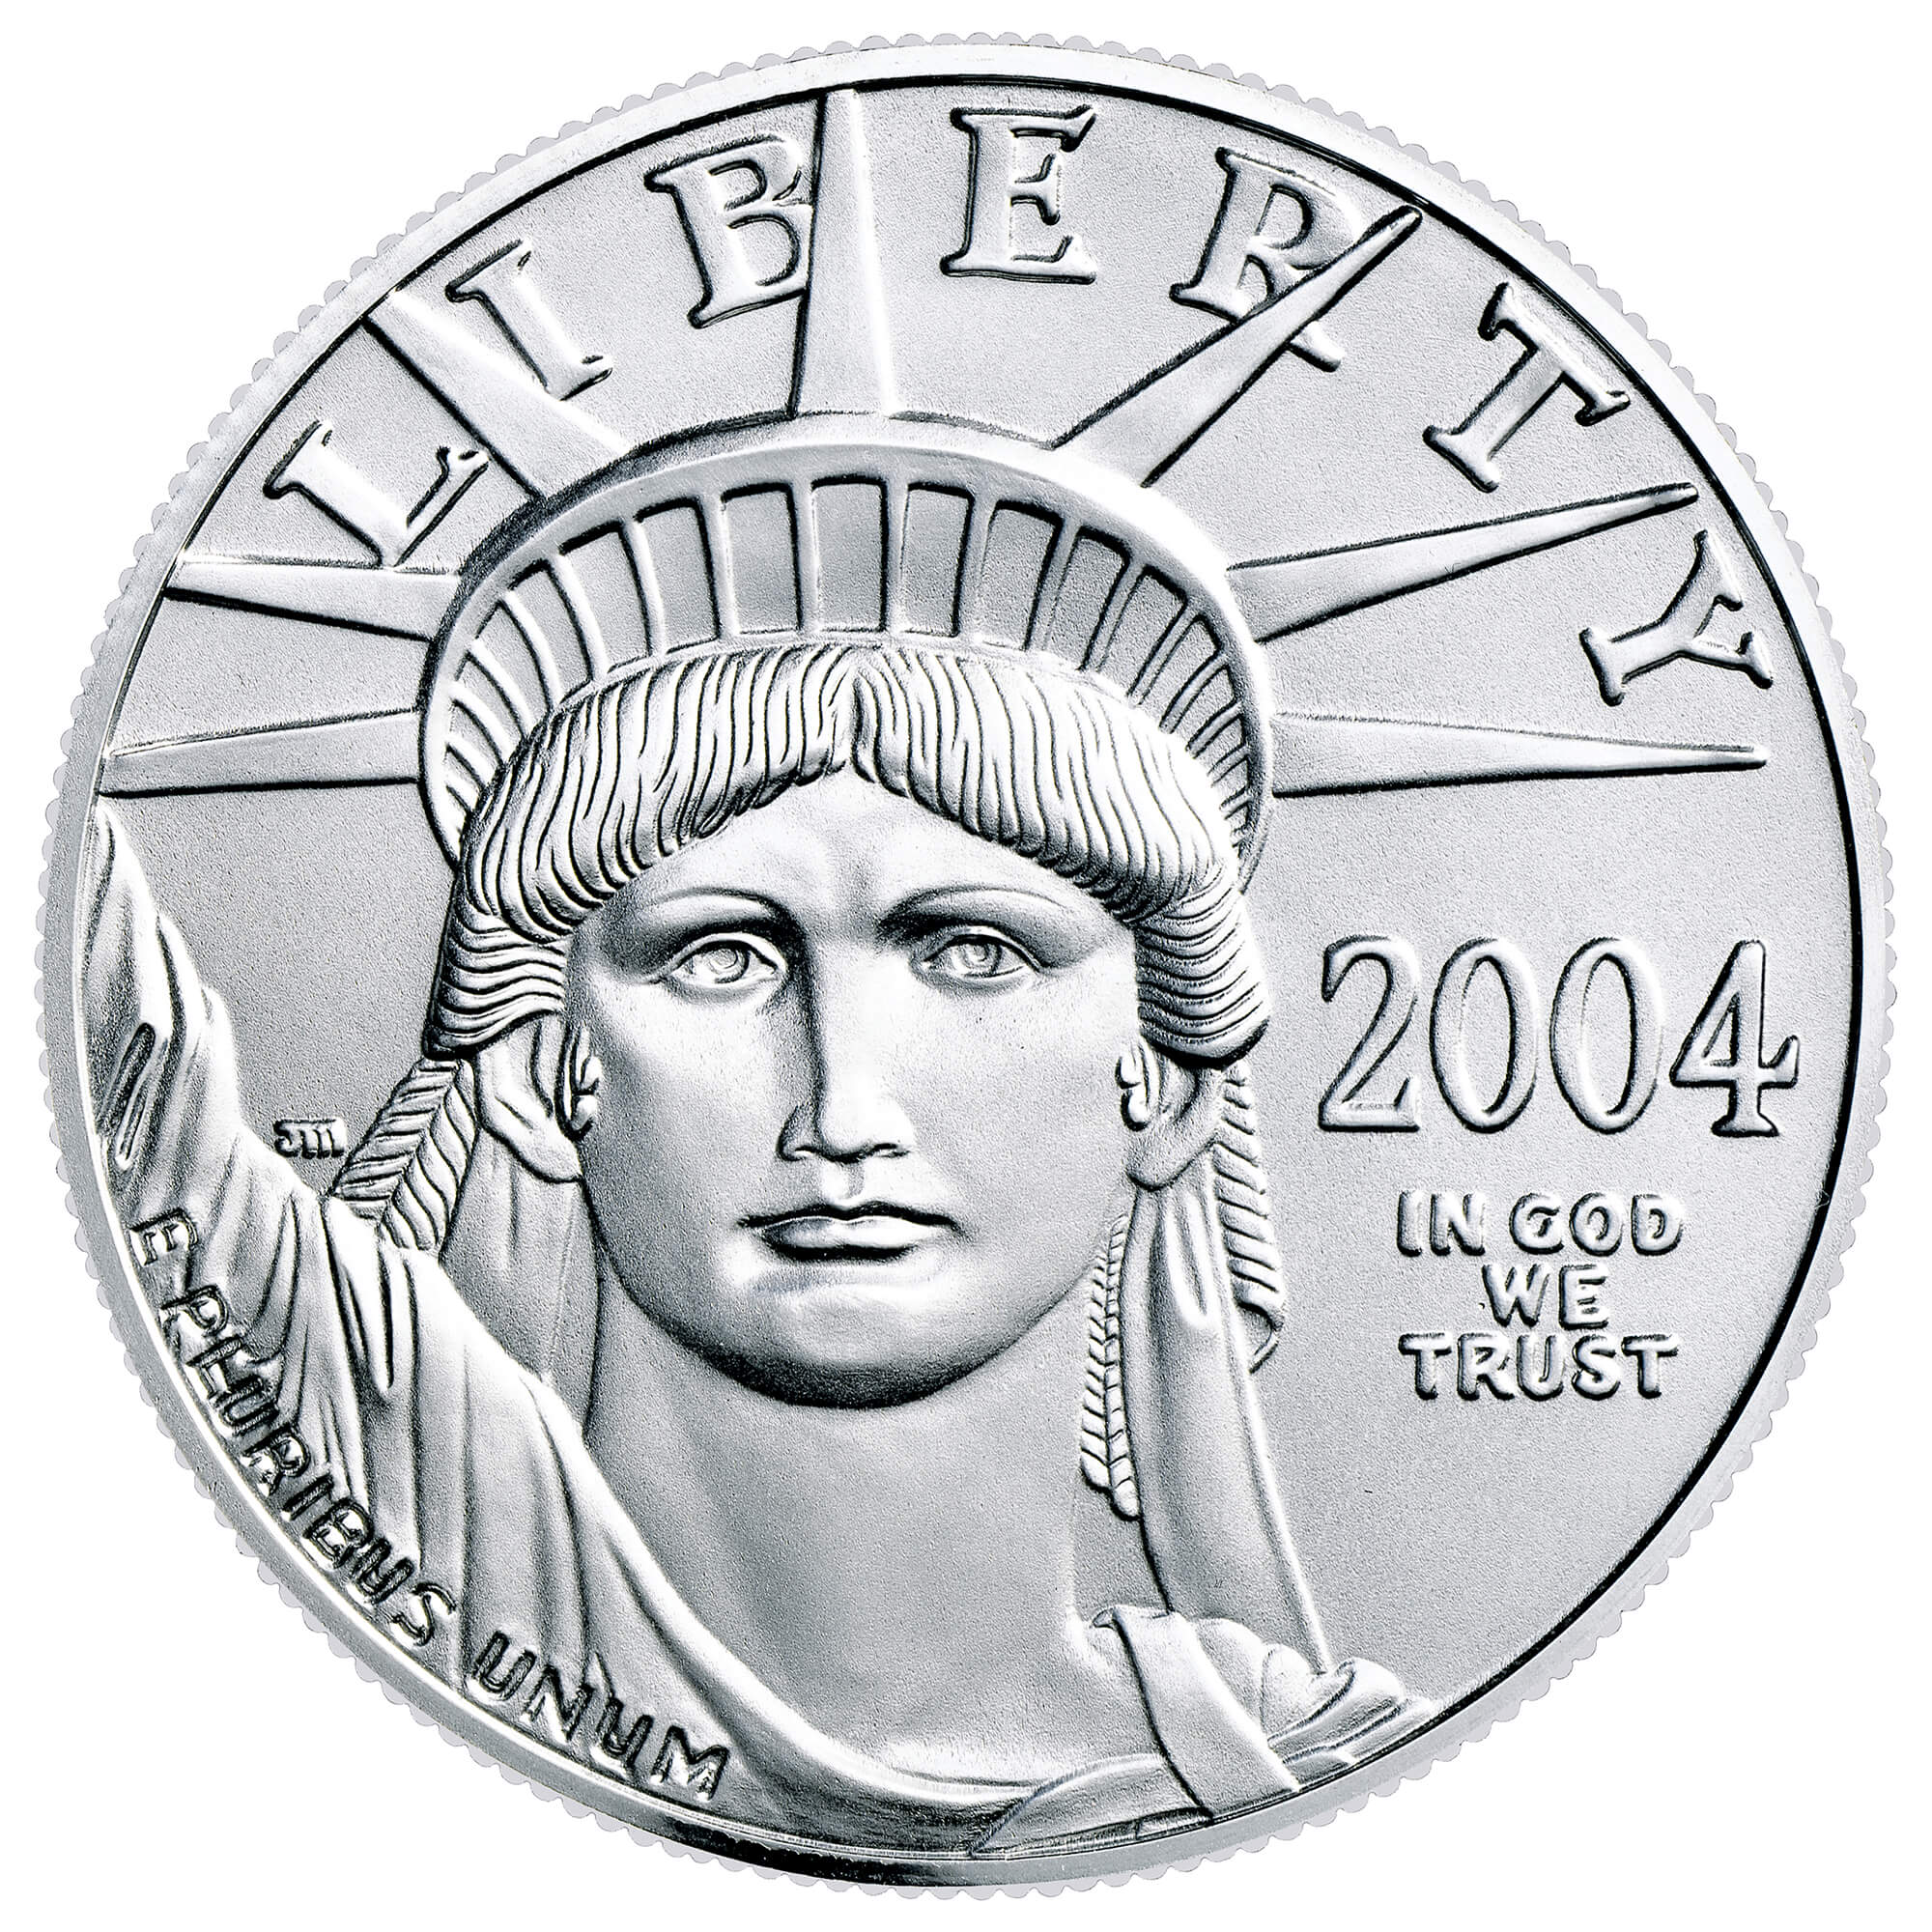 US 100 Dollars 2003 no mintmark